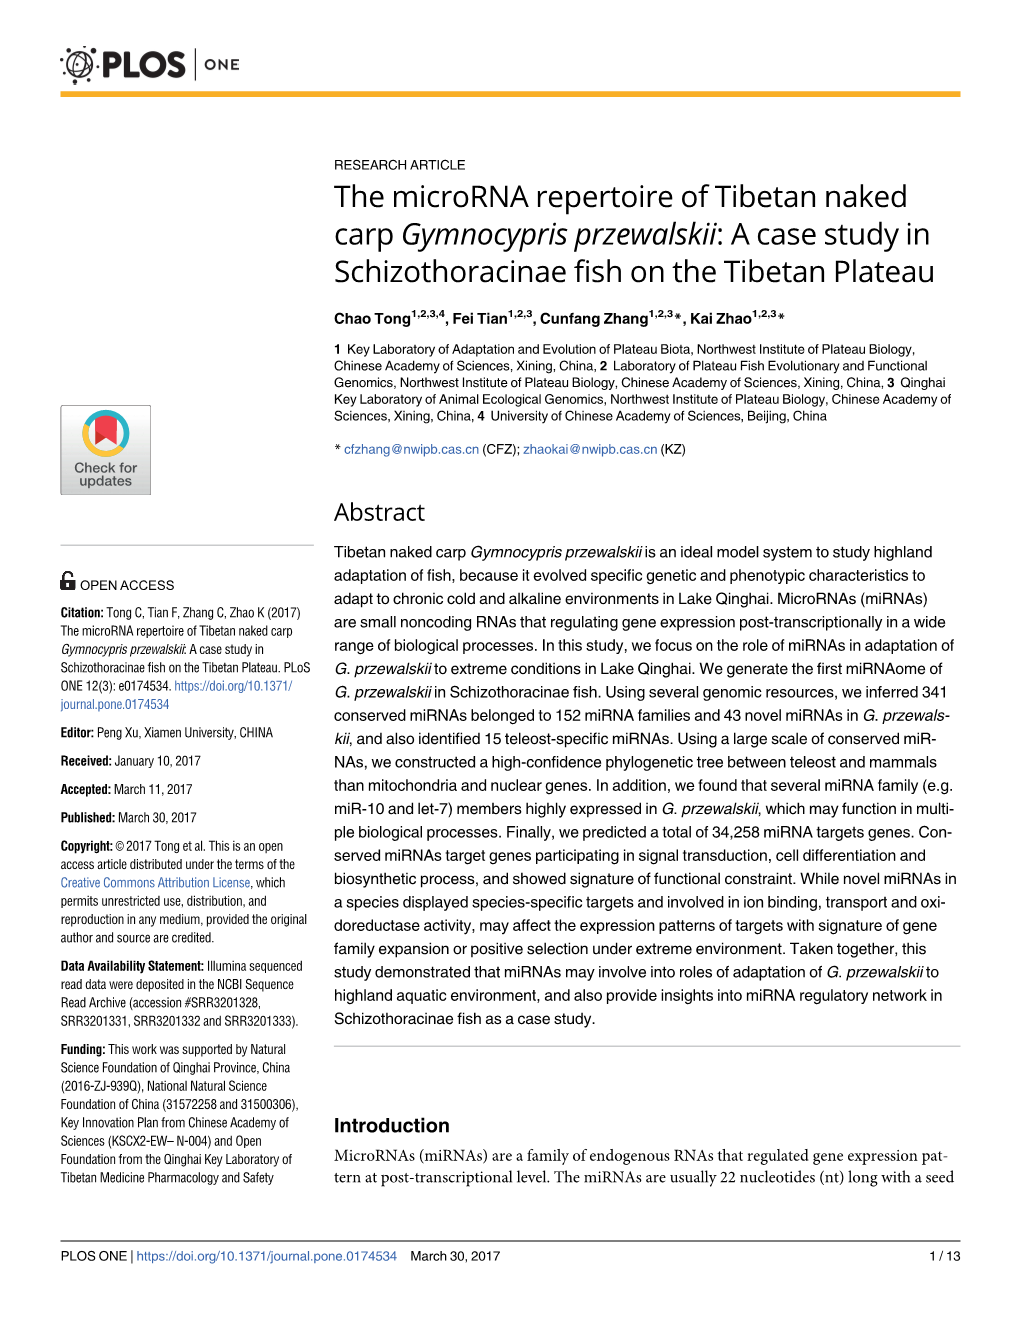 The Microrna Repertoire of Tibetan Naked Carp Gymnocypris Przewalskii: a Case Study in Schizothoracinae Fish on the Tibetan Plateau